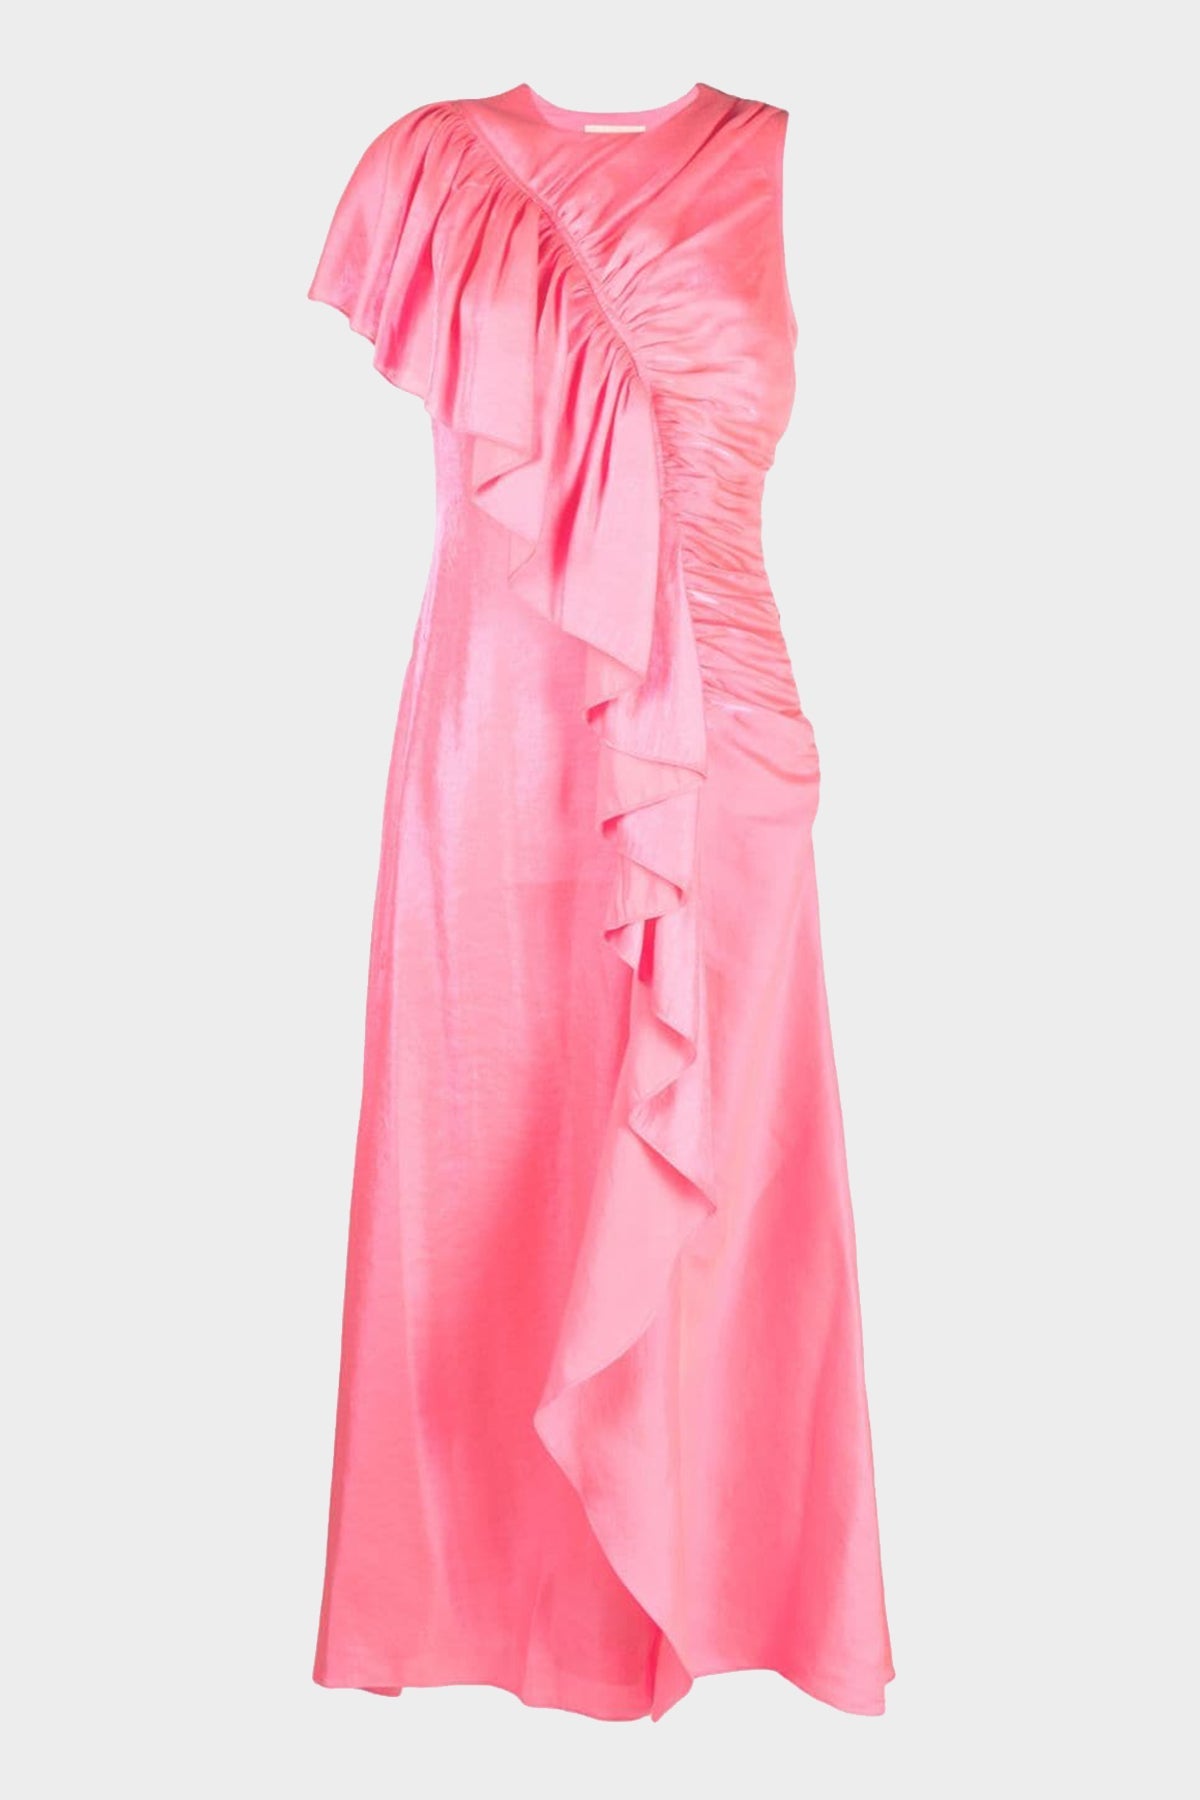 Lali Long Dress in Dahlia - shop-olivia.com